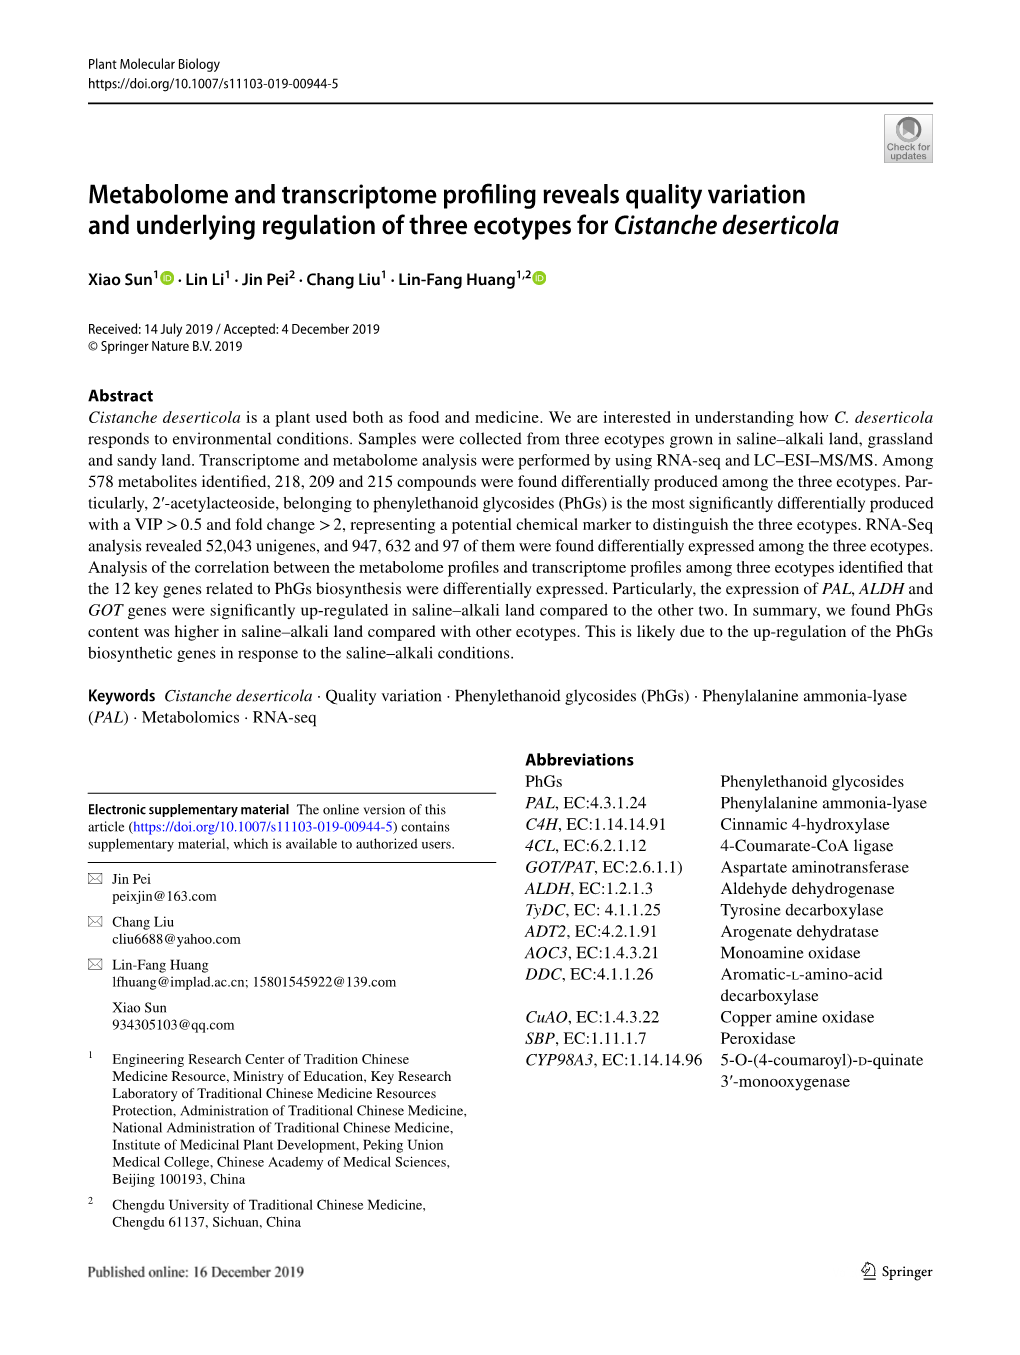 Metabolome and Transcriptome Profiling Reveals Quality Variation